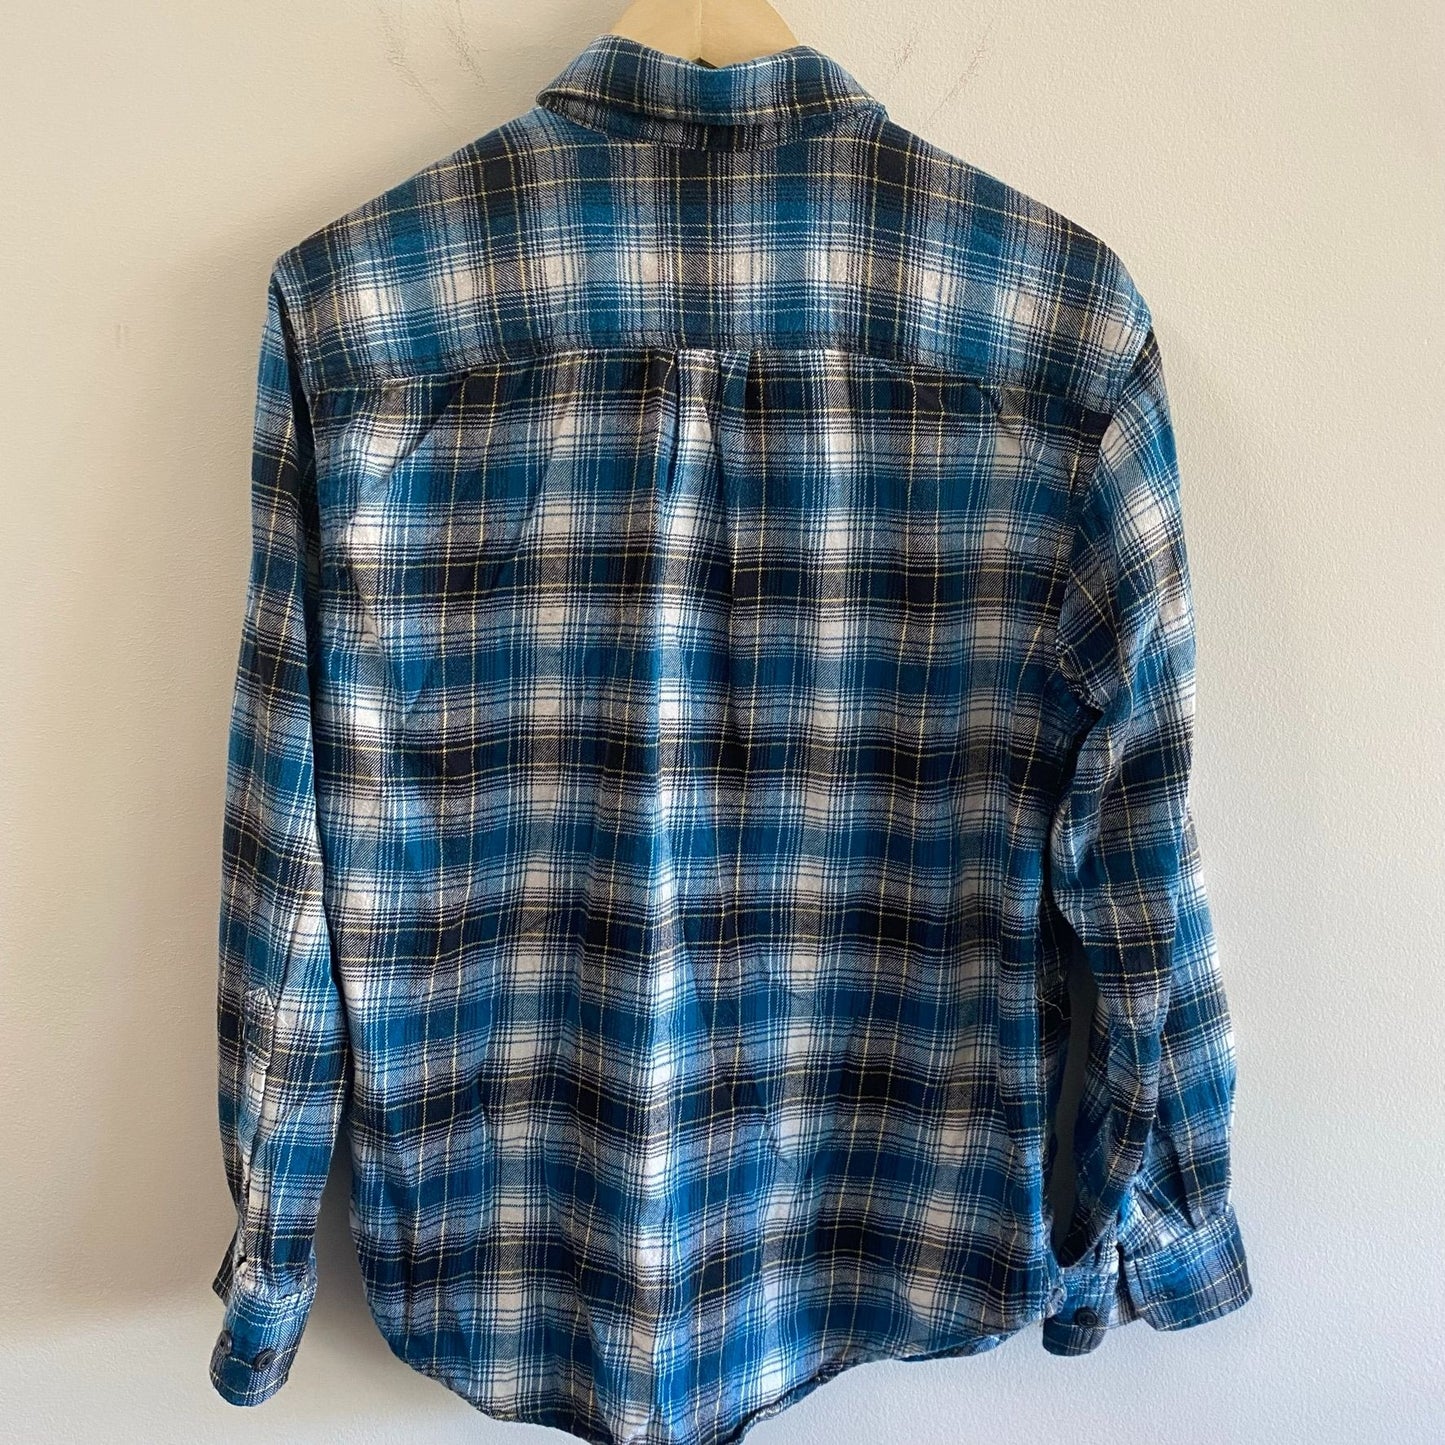 Basic Editions Blue Plaid Flannel Shirt